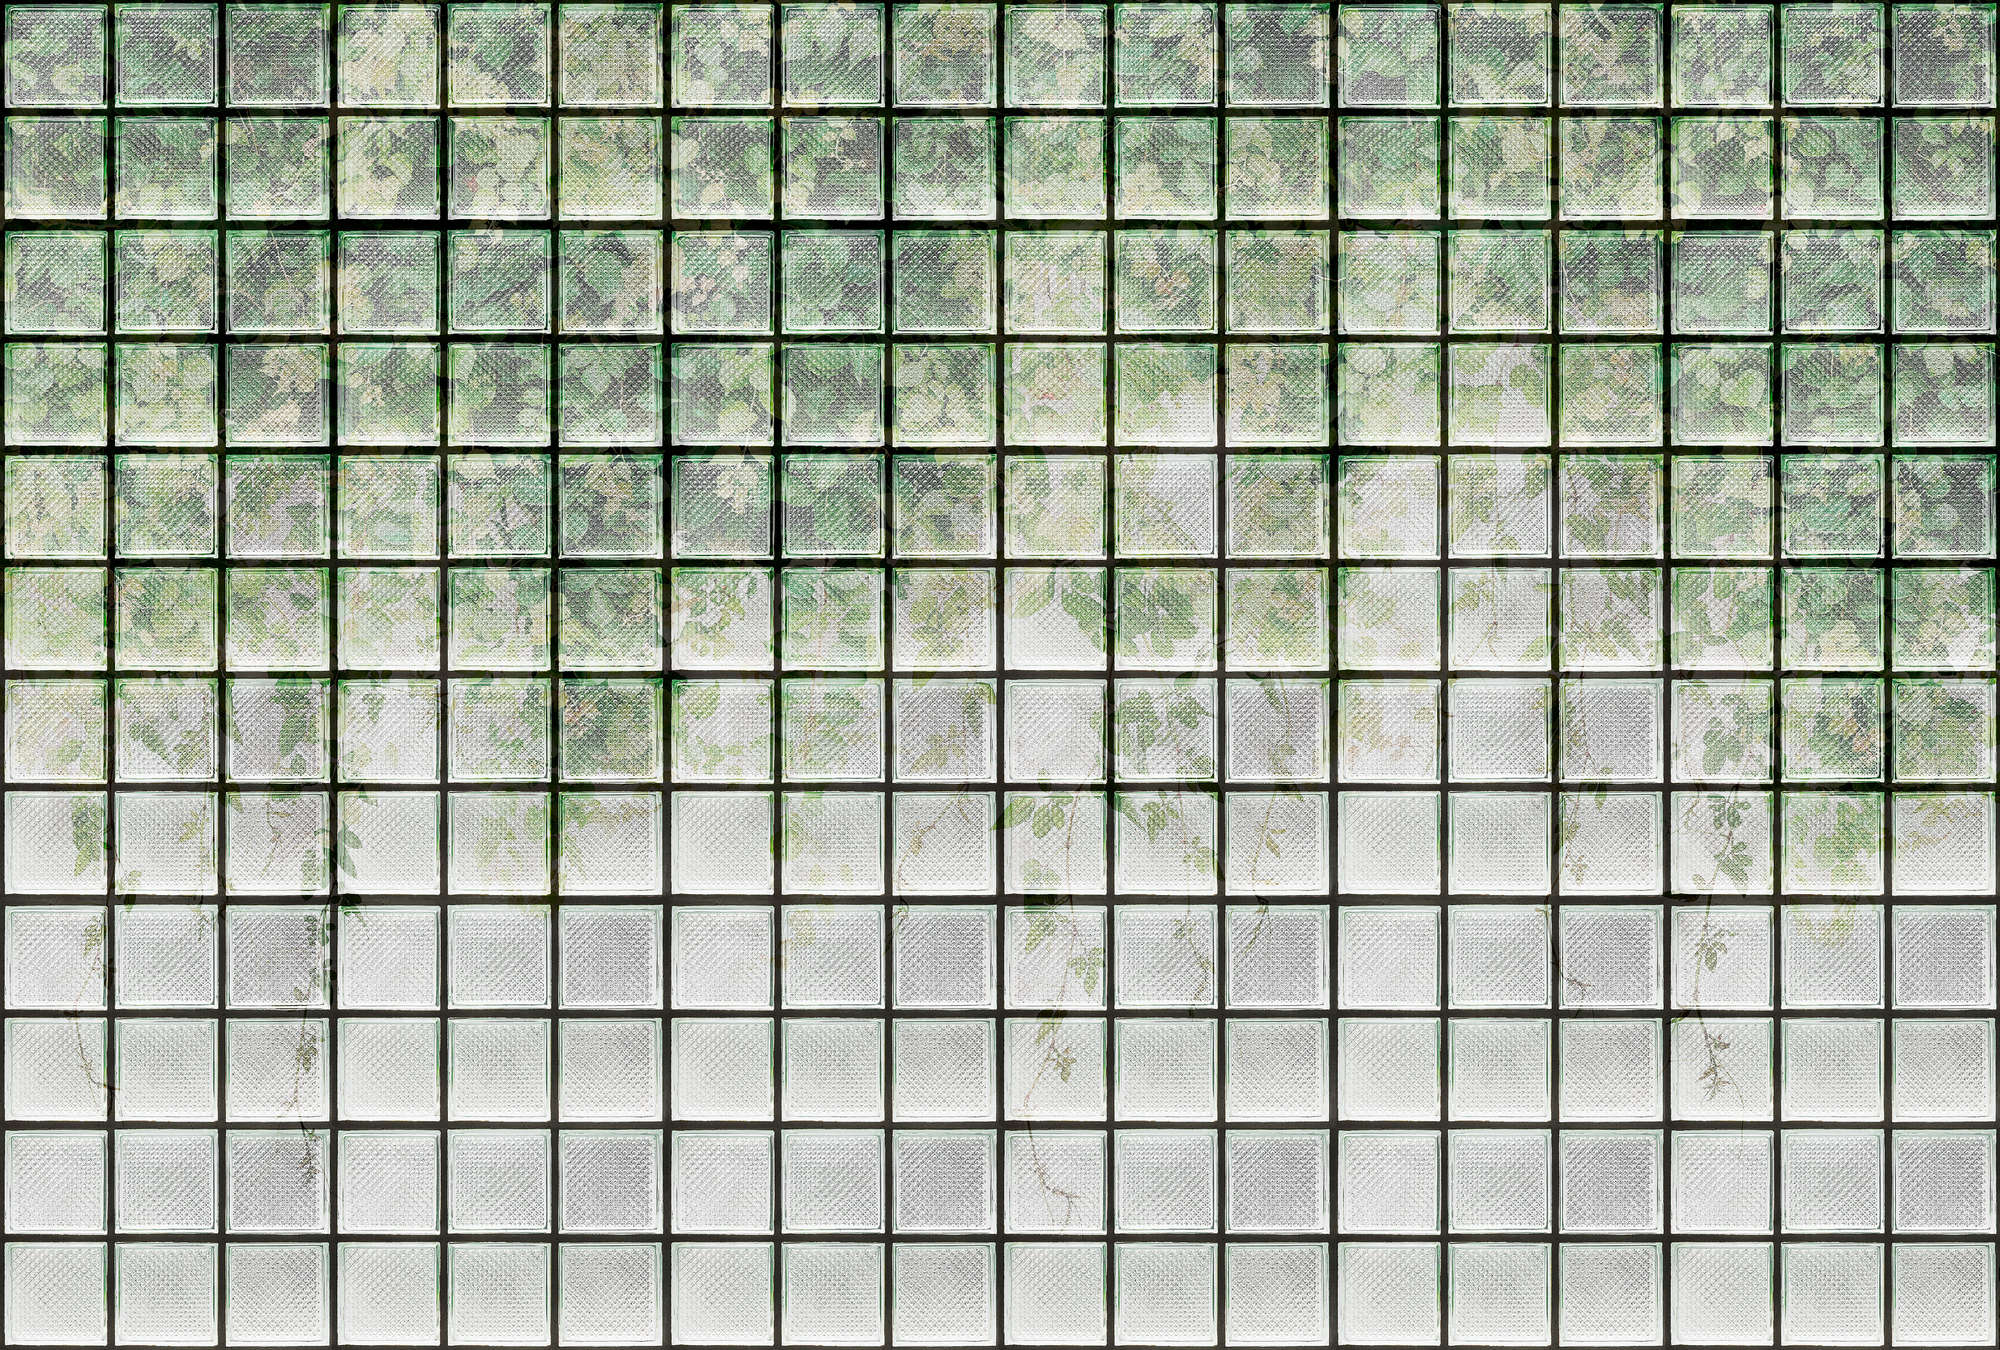             Green House 2 - Greenhouse photo wallpaper leaves & glass blocks
        